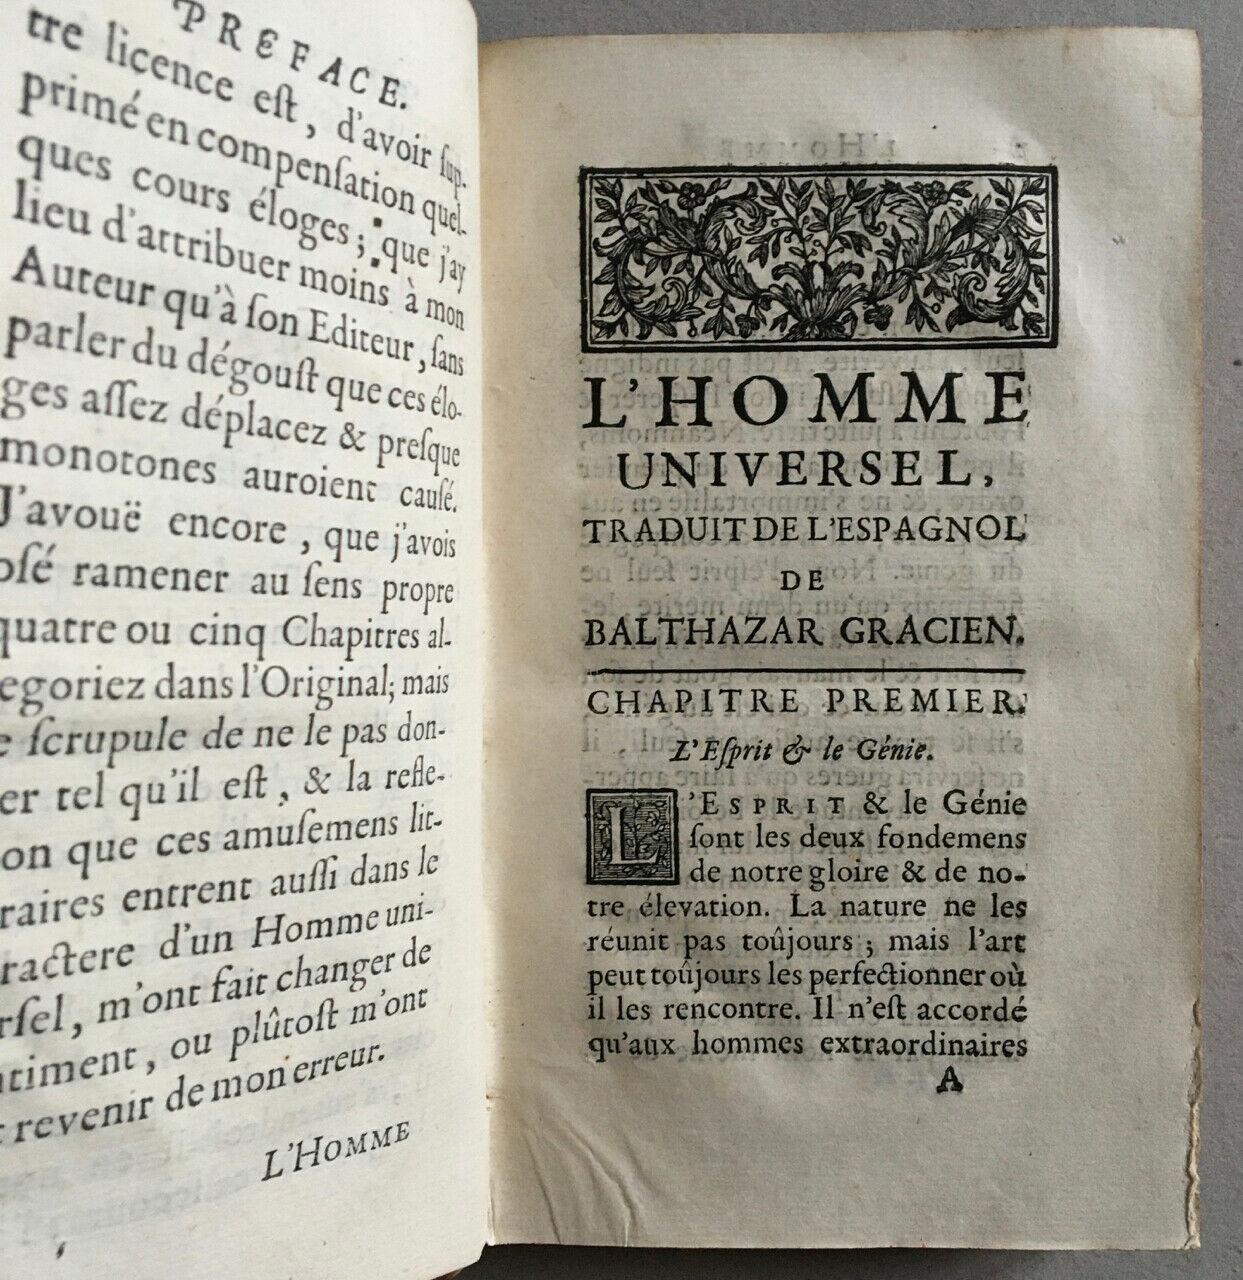 Baltasar Gracien [Baltazar Gracian] — L'Homme universel — É.O. — Pissot — 1723.